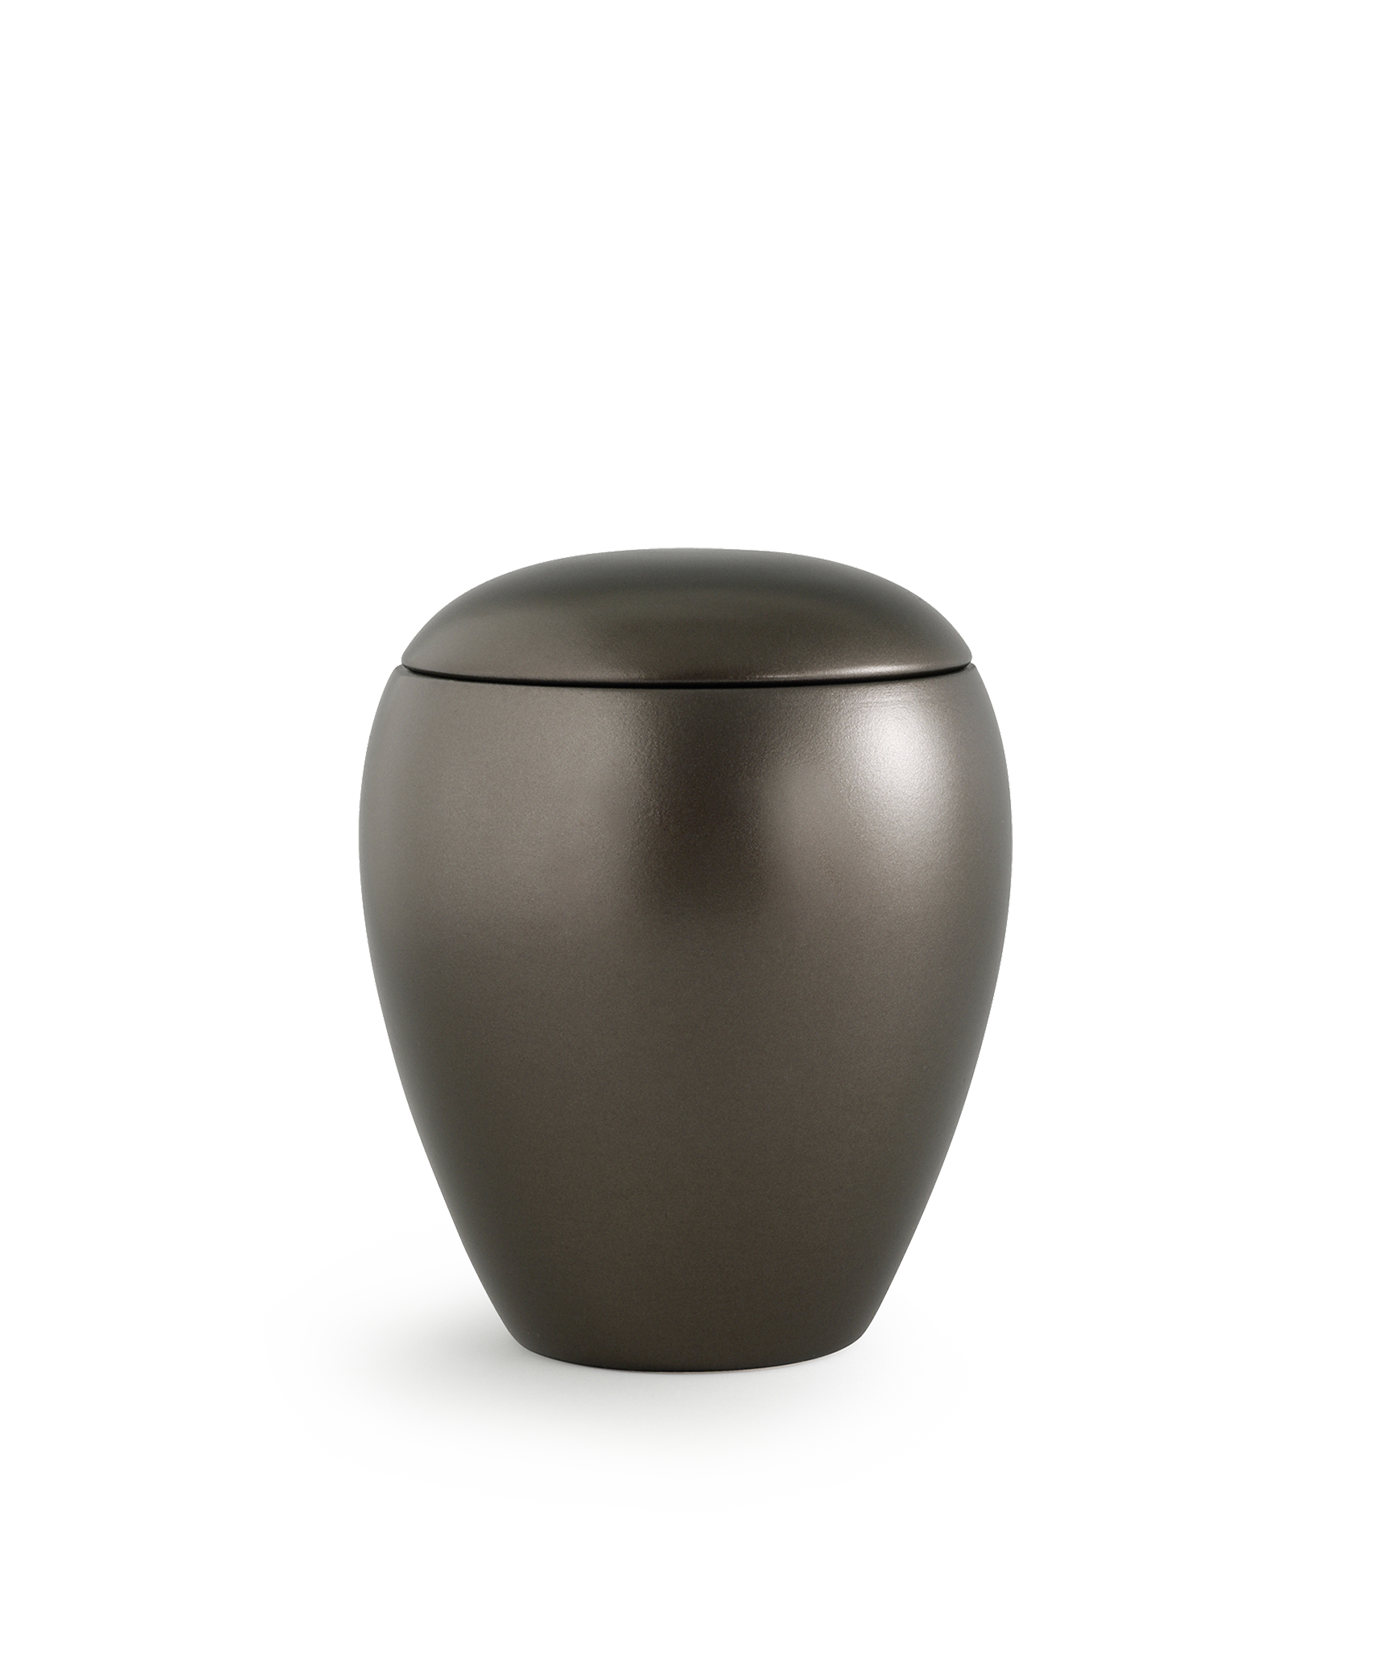 Tierurne - Keramik chocolat 1500ml